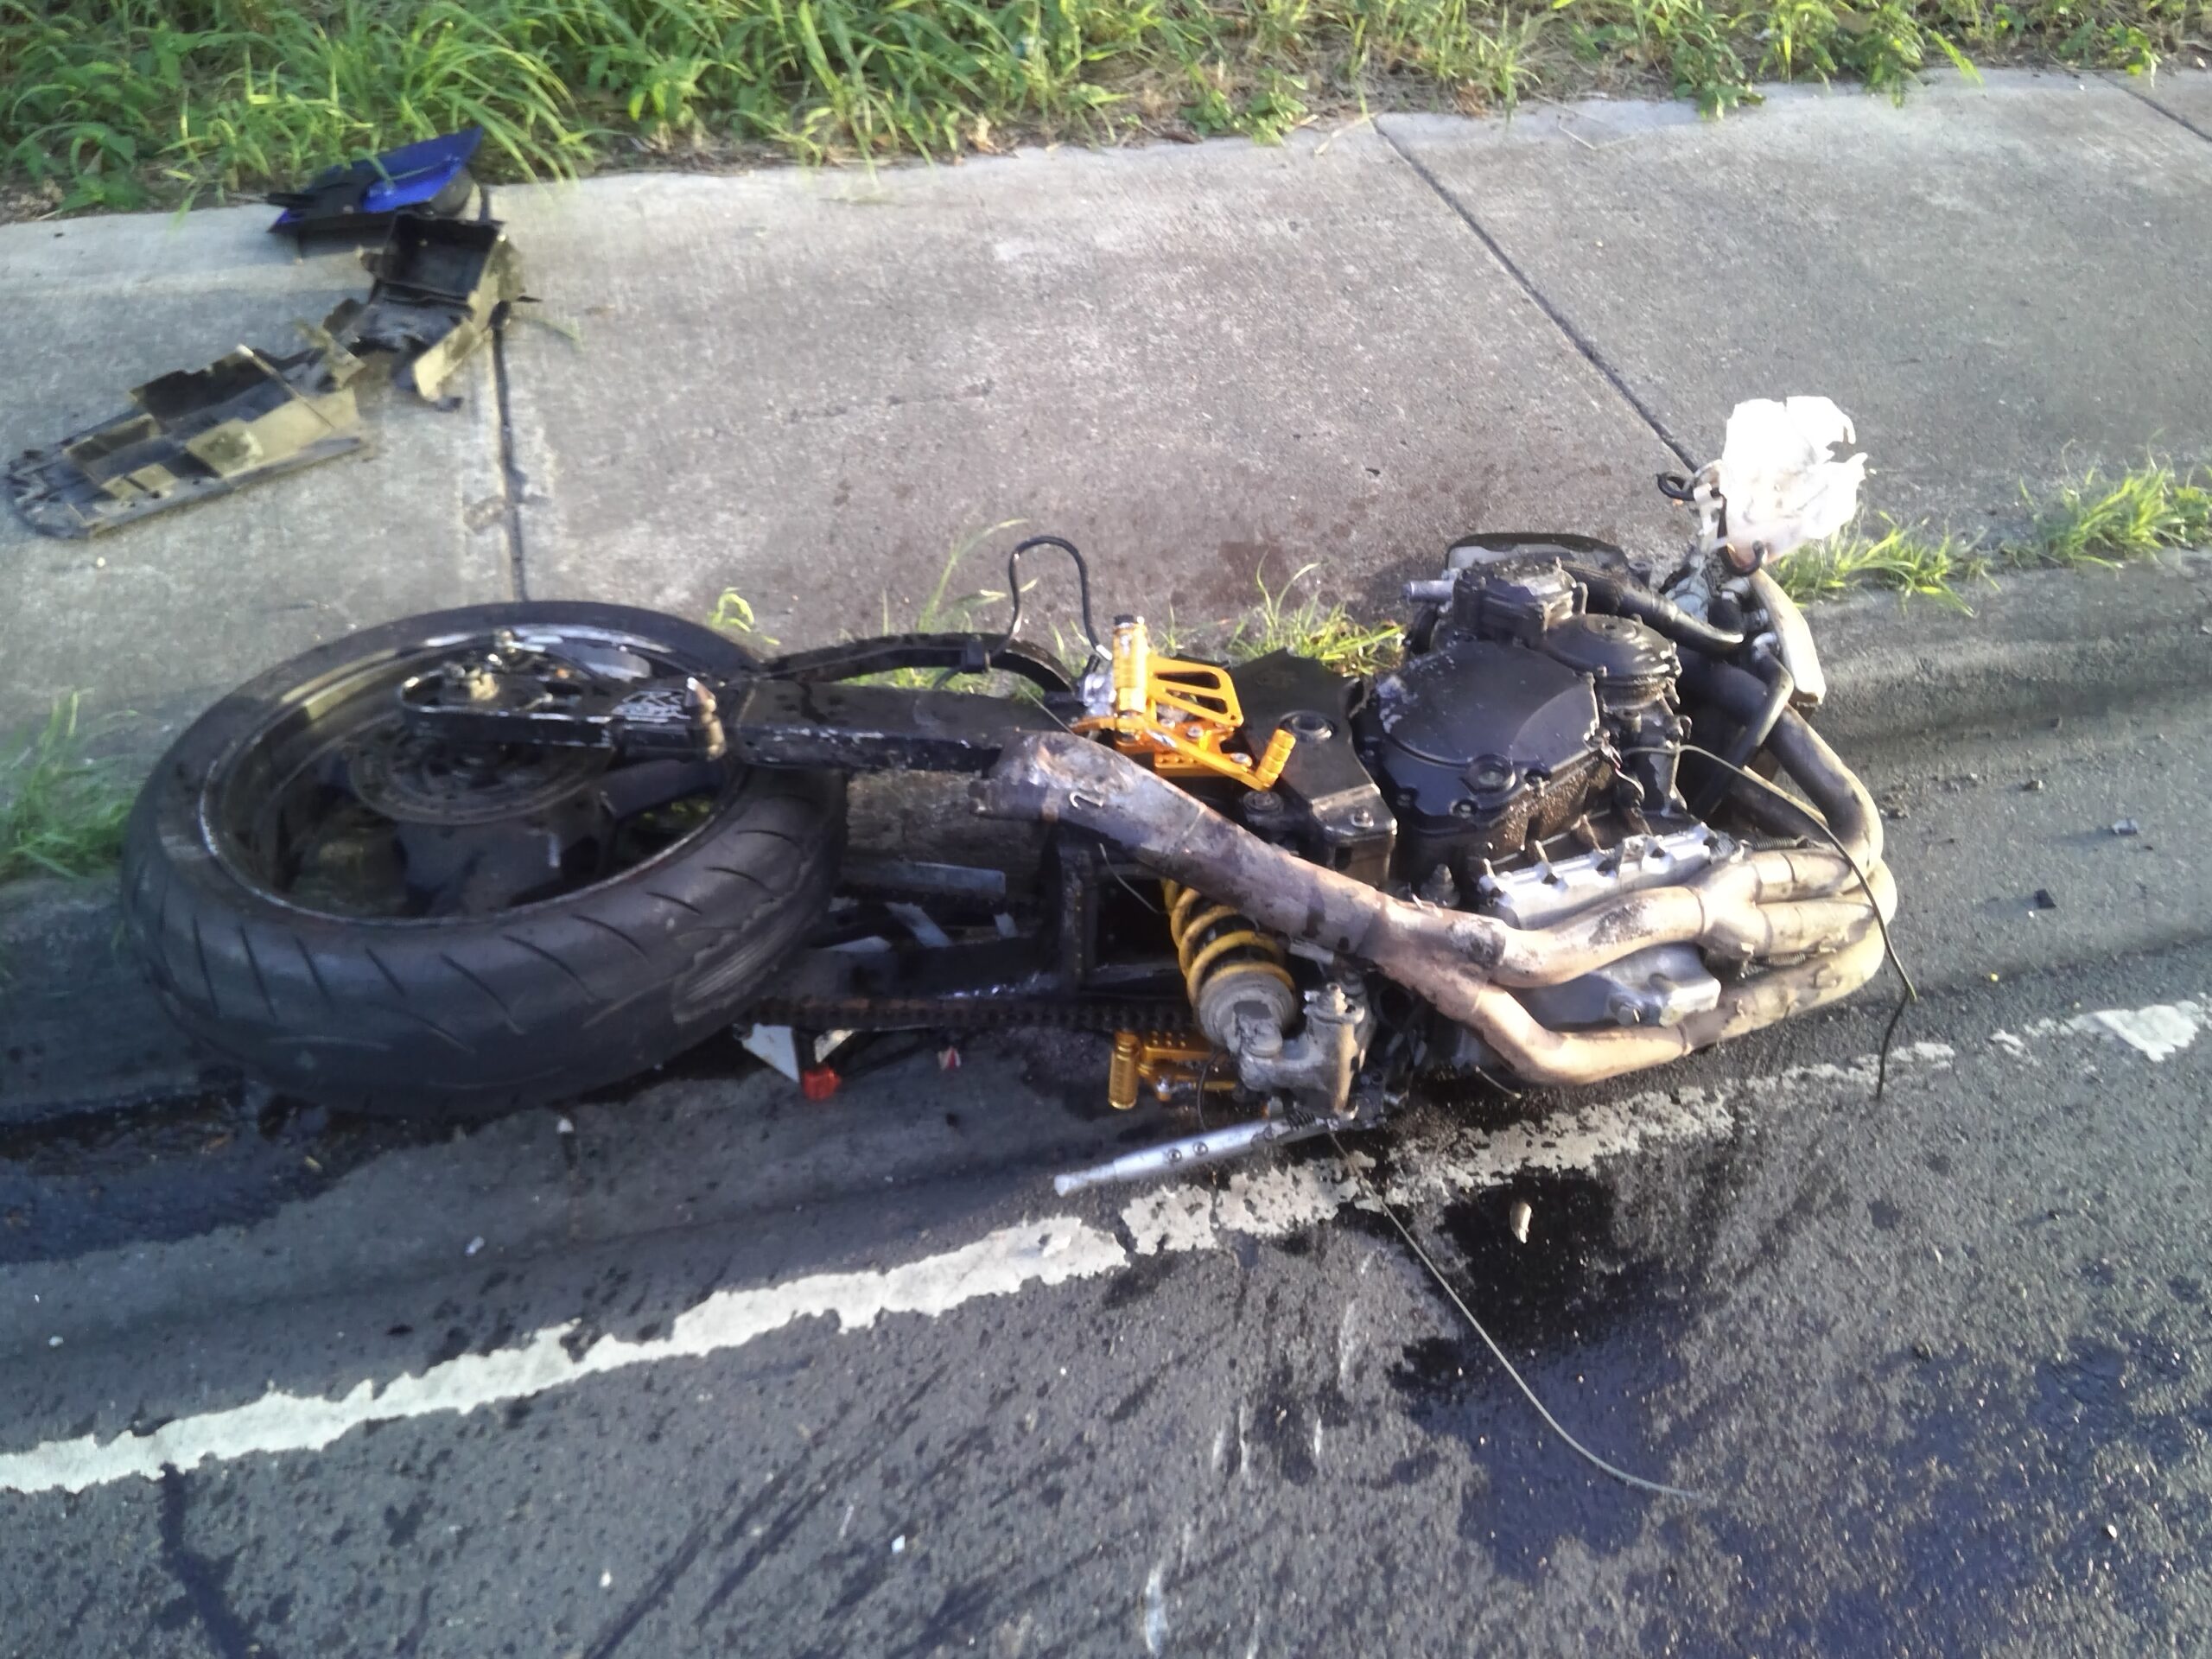 Boetzberg Man Dies In Motorcycle Accident With Sedan Near Ballpark